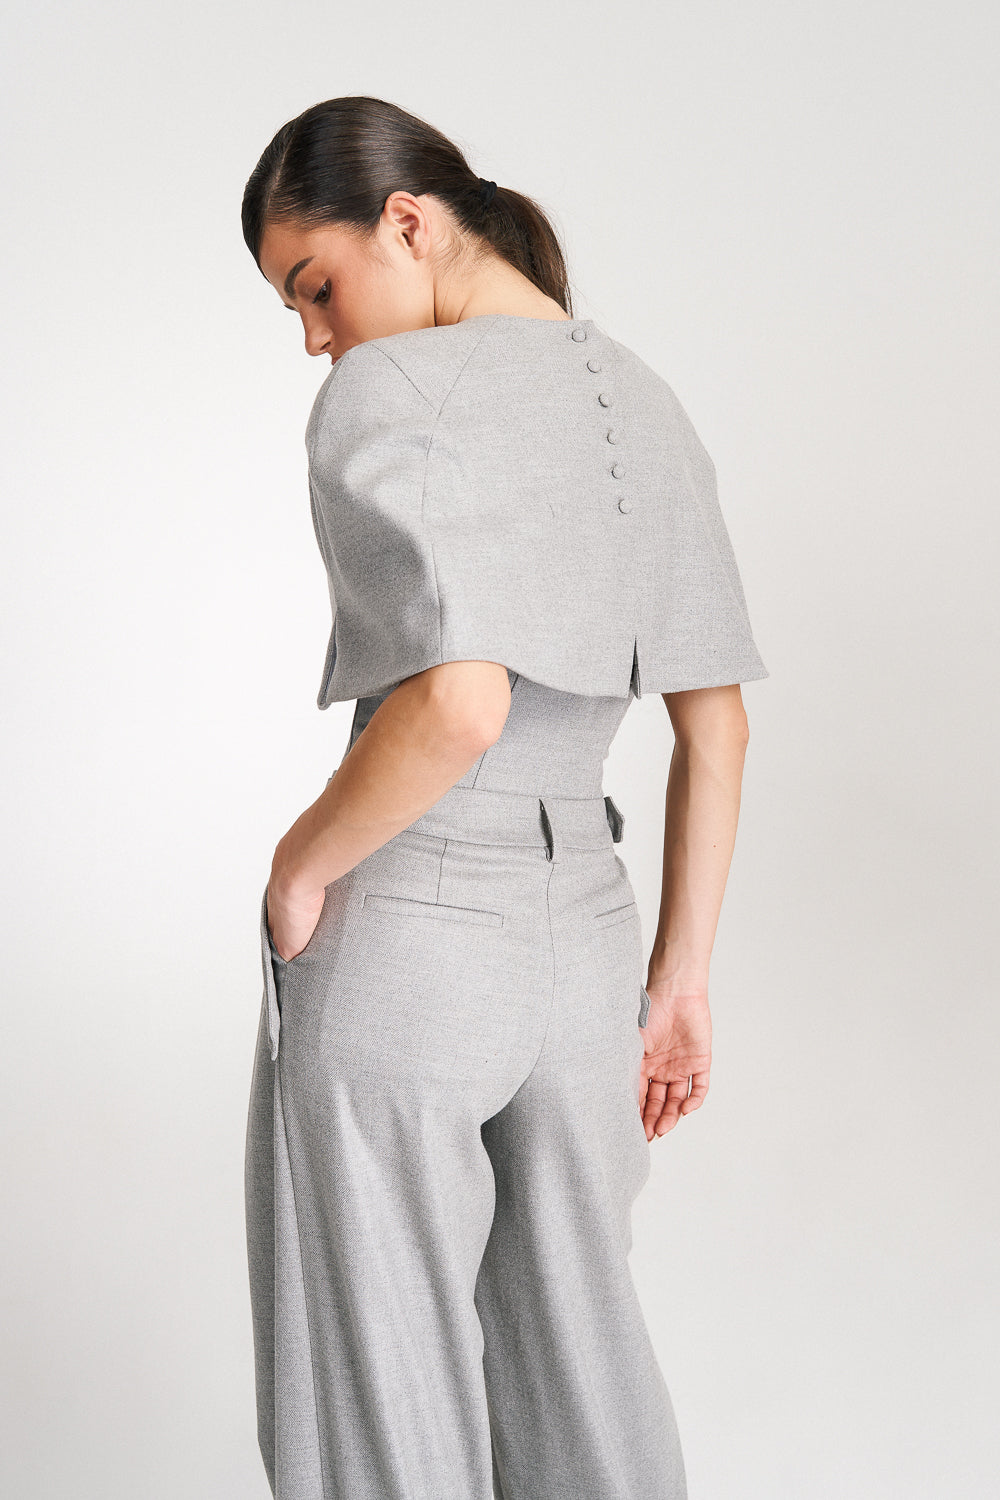 'Eleonore' Grey Cape-Effect Wool Blouse